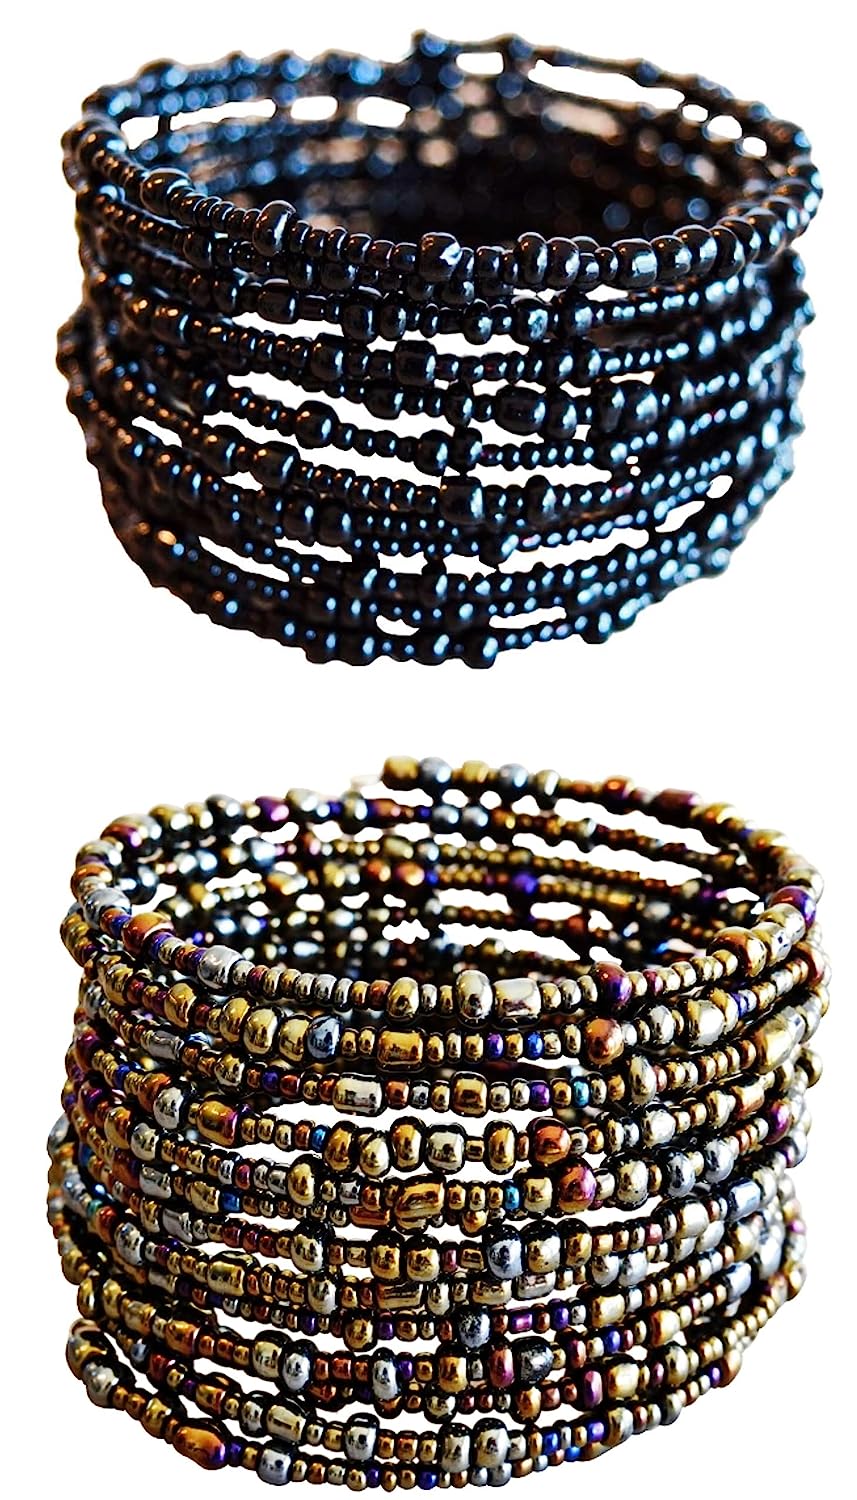 HANDMADE from AFRICA - SET OF 2 HANDMADE Bead Wrap Bracelets - made of 10 wire loops each - Unique African Jewelry - Handmade in Kenya - Metallic|Bronze|Eggplant Purple|Berry Blue, Black, KB50